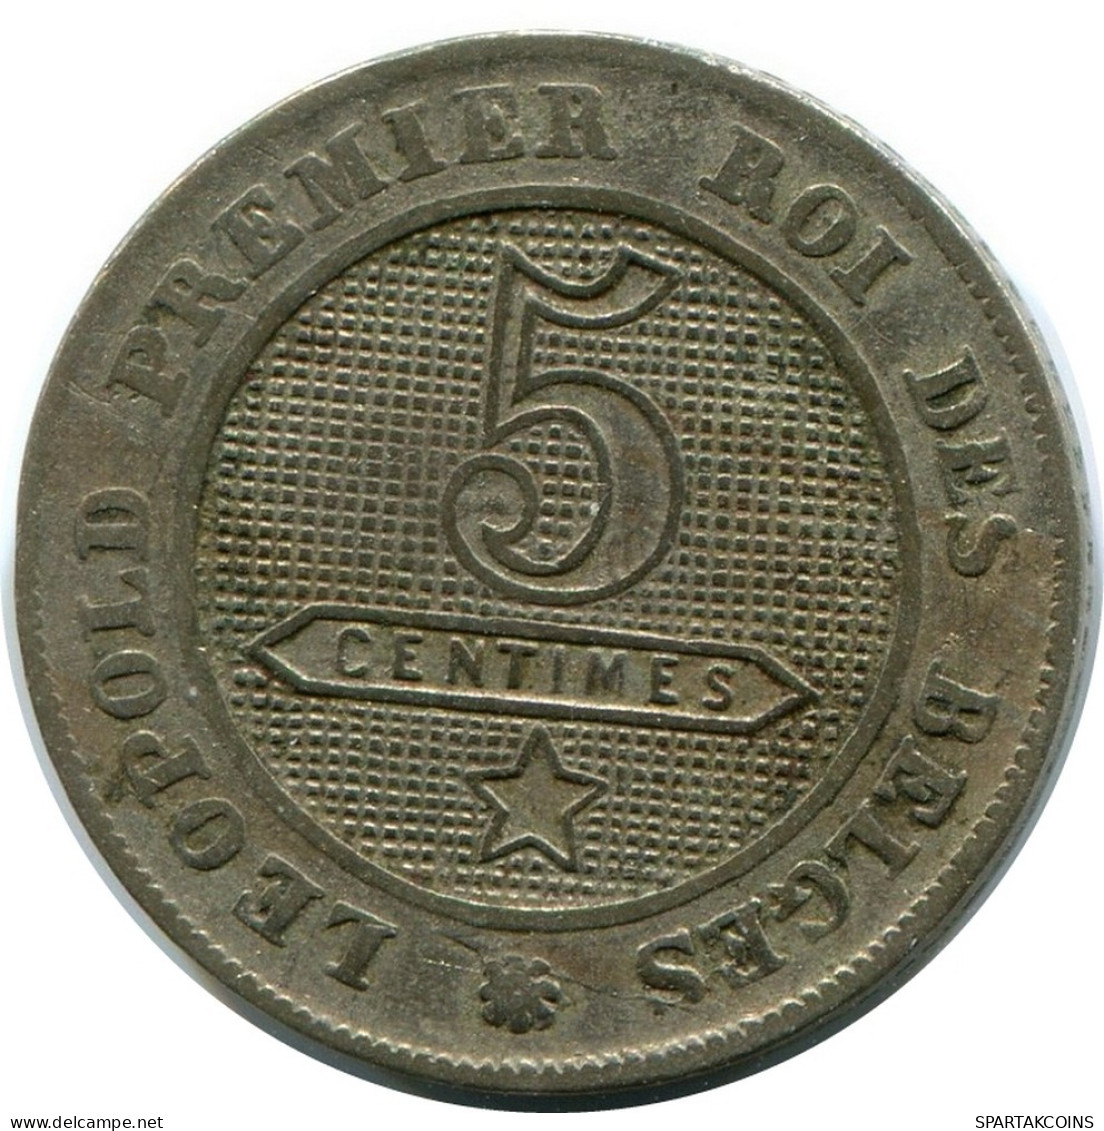 5 CENTIMES 1862 BELGIUM Coin #AX362.U - 5 Cents